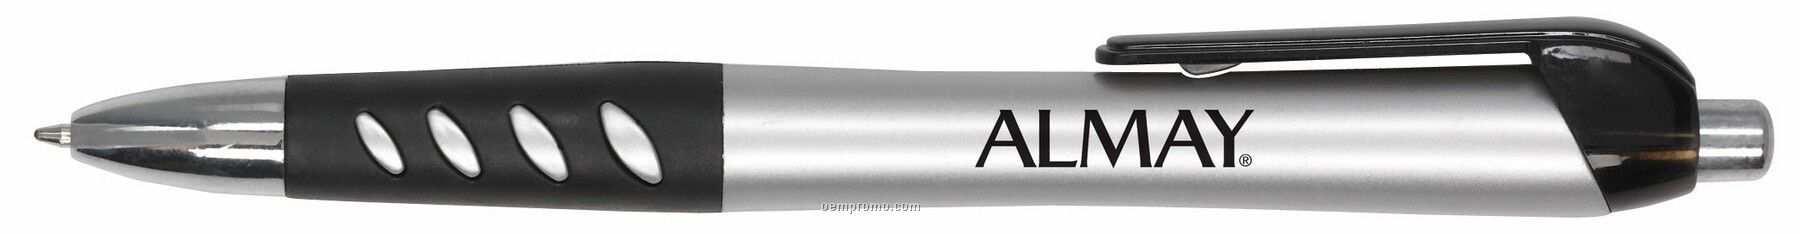 Mercury Sleek Barrel Ballpoint Pen W/ Vented Rubber Grip